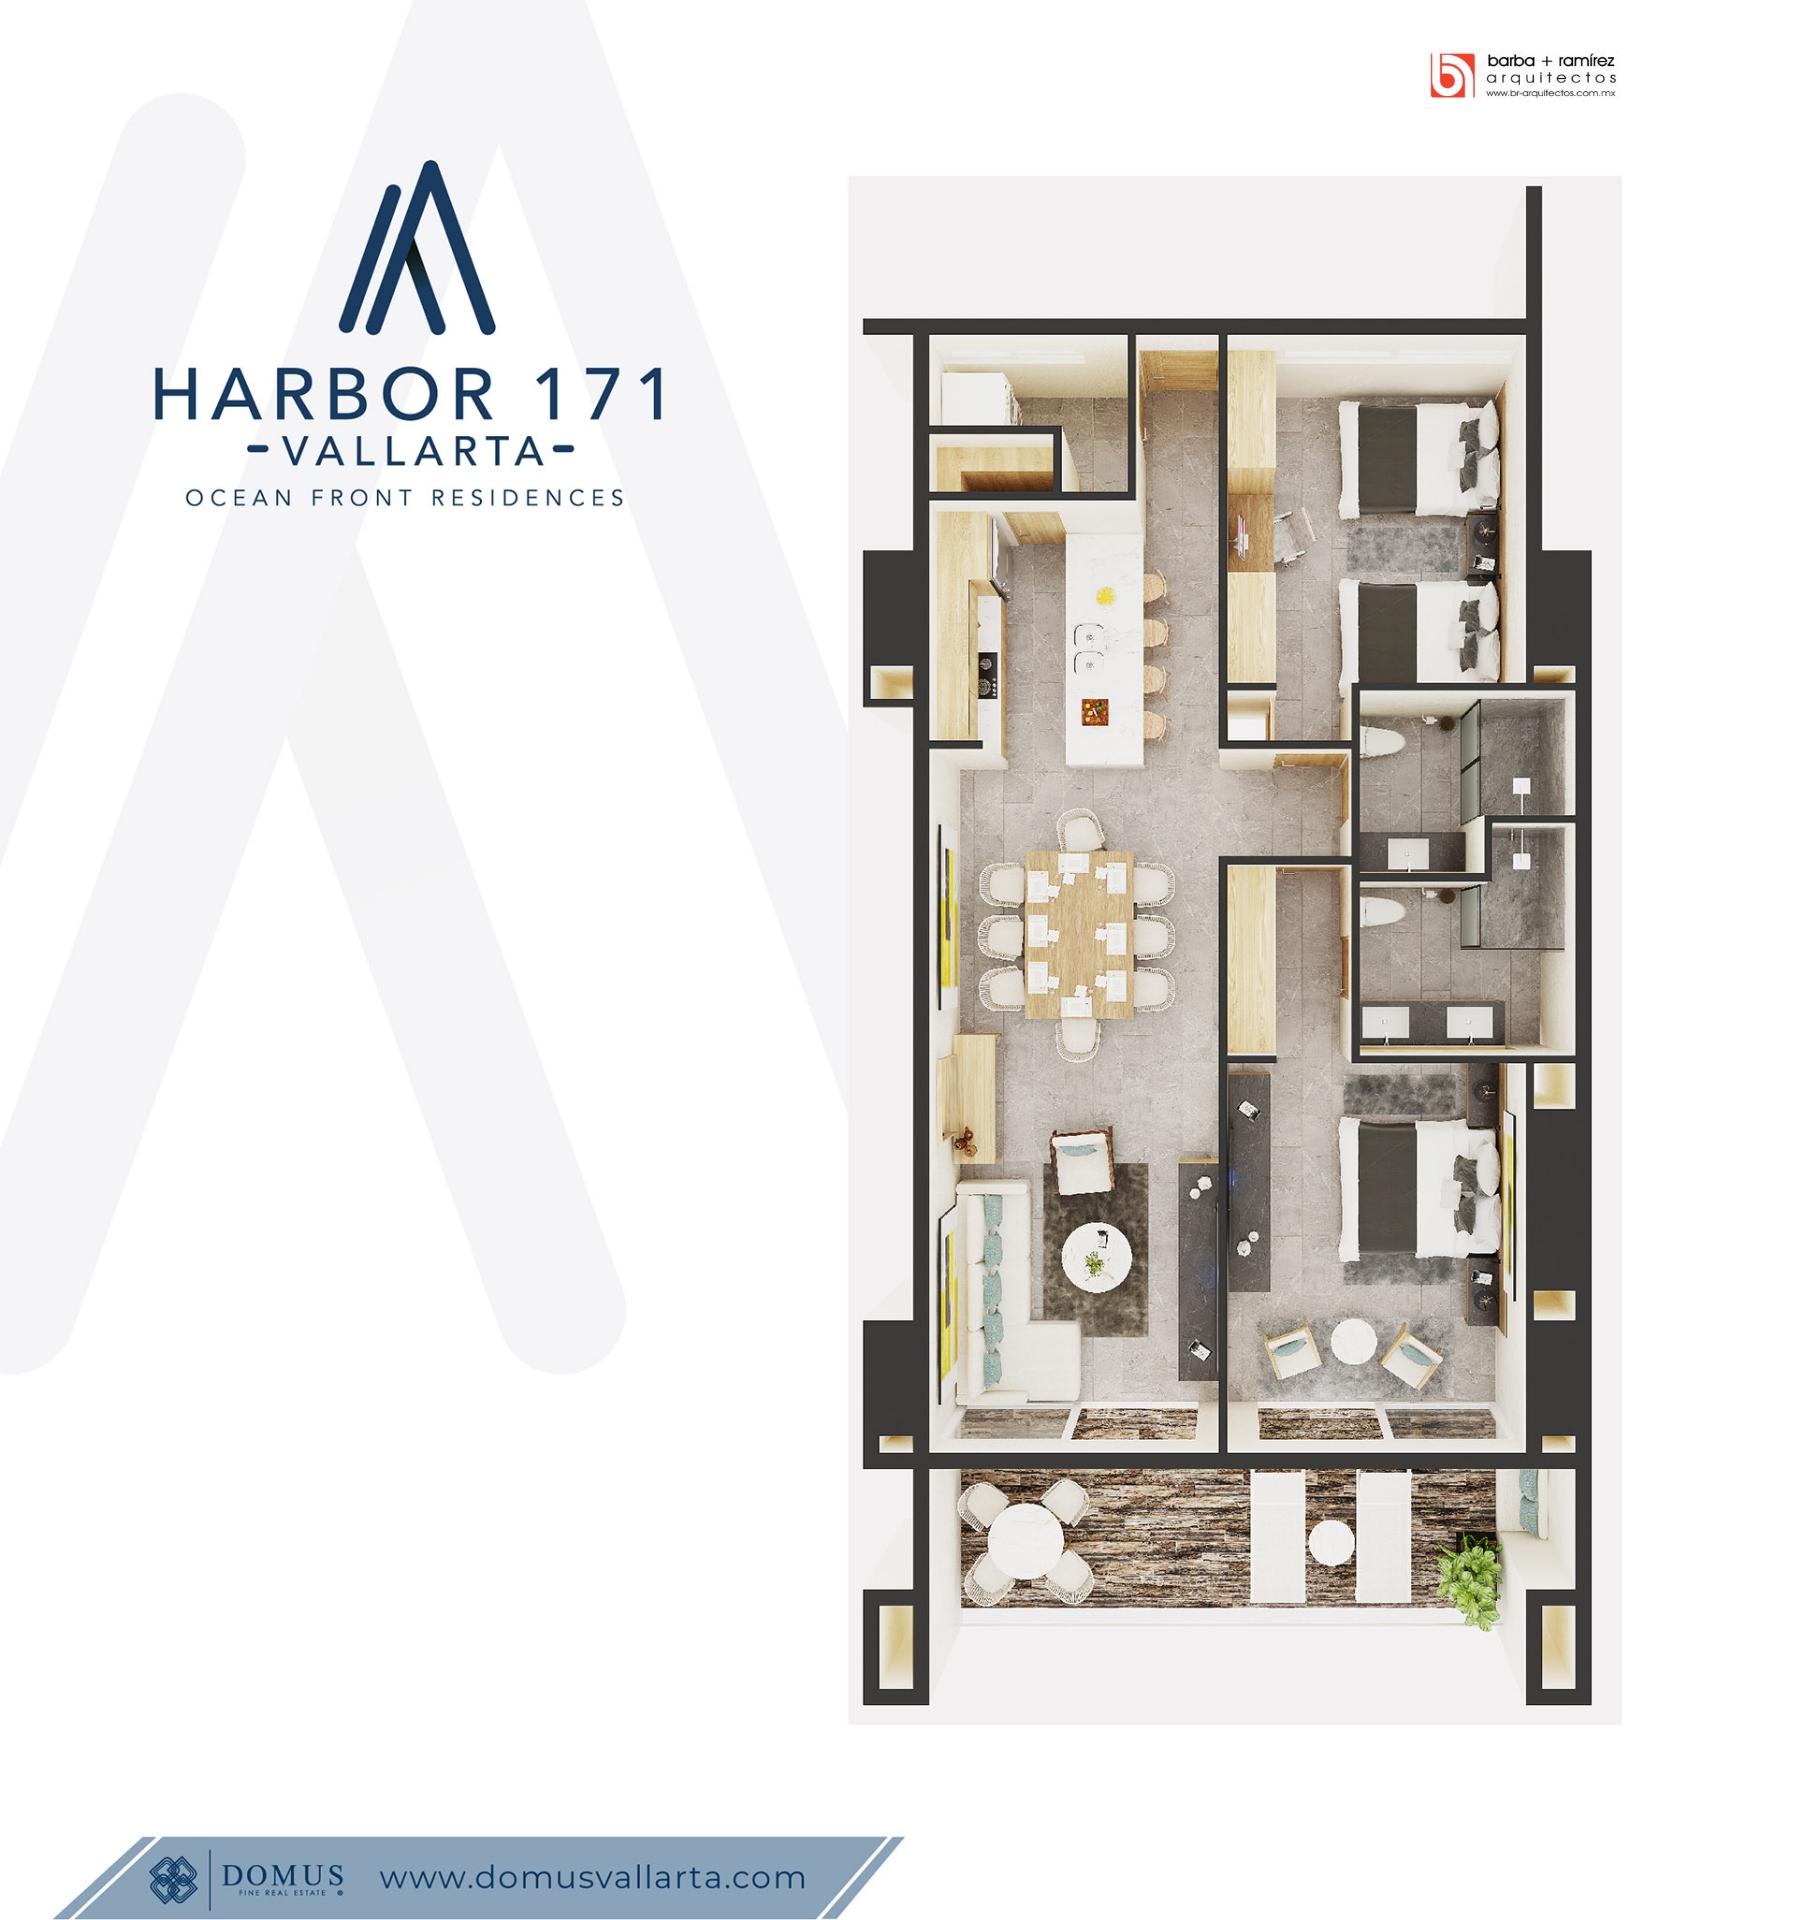 Unit 406 Blueprint - Harbor 171